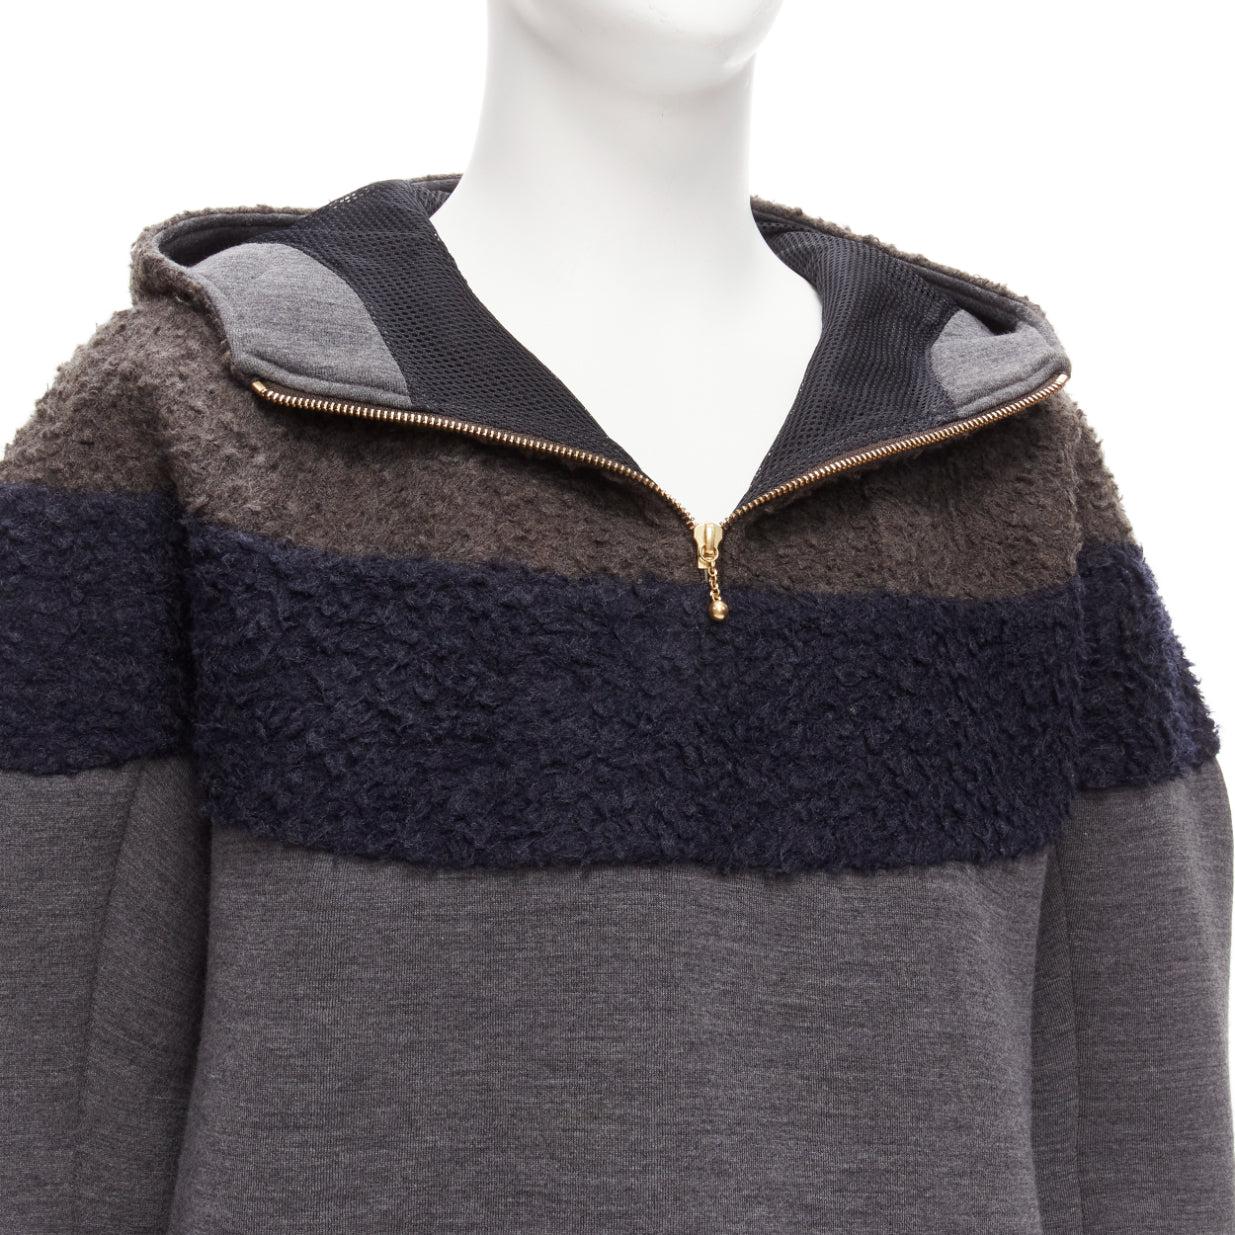 KOLOR grey navy wool blend colorblock dolman sleeve half zip knitted hoodie JP5 XXL
Reference: CAWG/A00258
Brand: Kolor
Material: Wool, Blend
Color: Navy, Grey
Pattern: Solid
Closure: Zip
Extra Details: Half zip closure at front. Mesh lining for